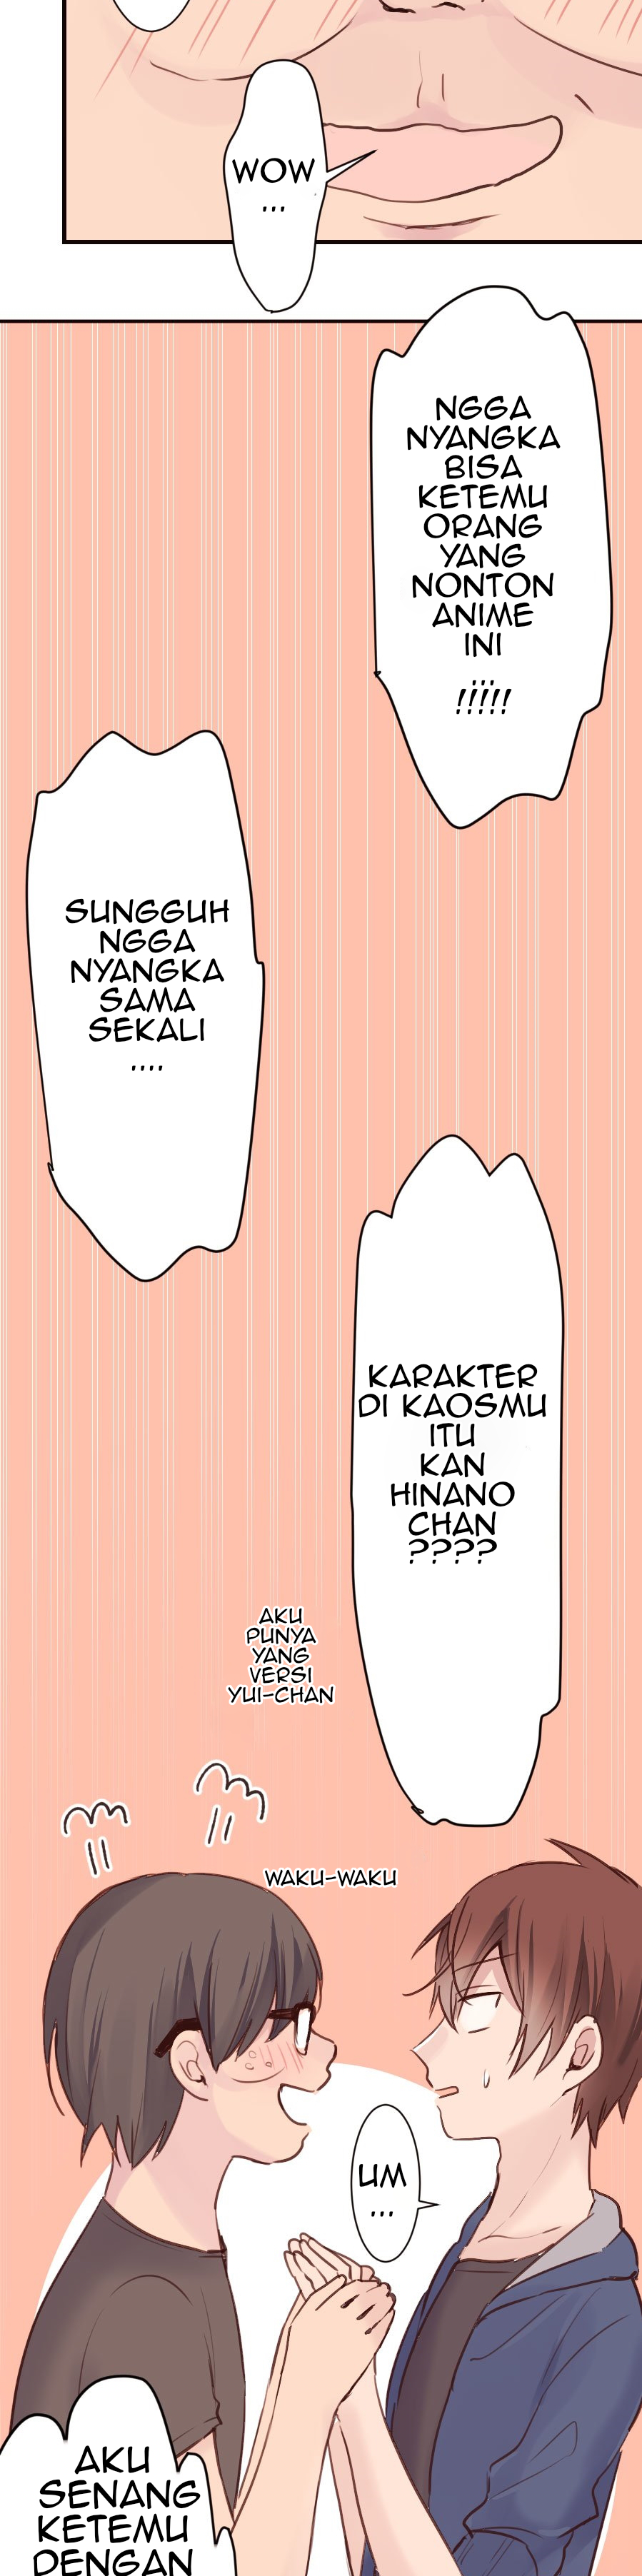 Class Maid (shimamura) Chapter 19